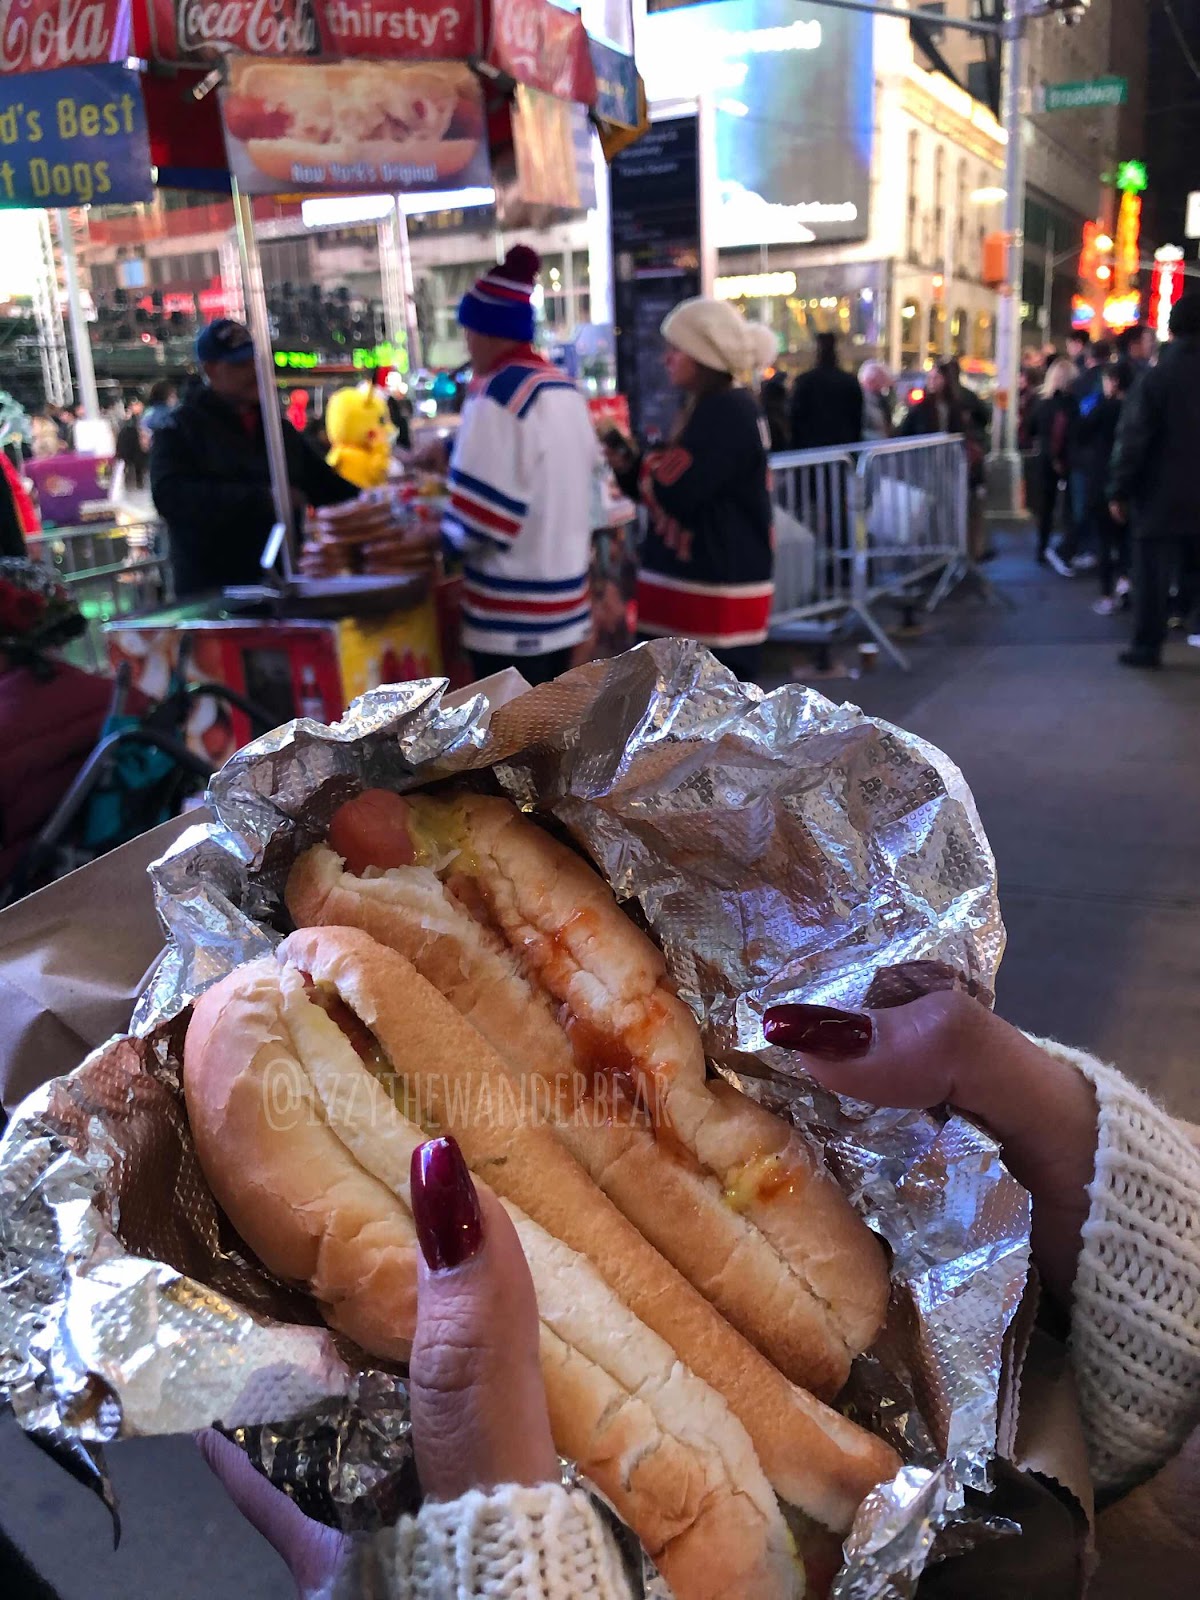 ITWB - Times Square and its street food: Sabrett